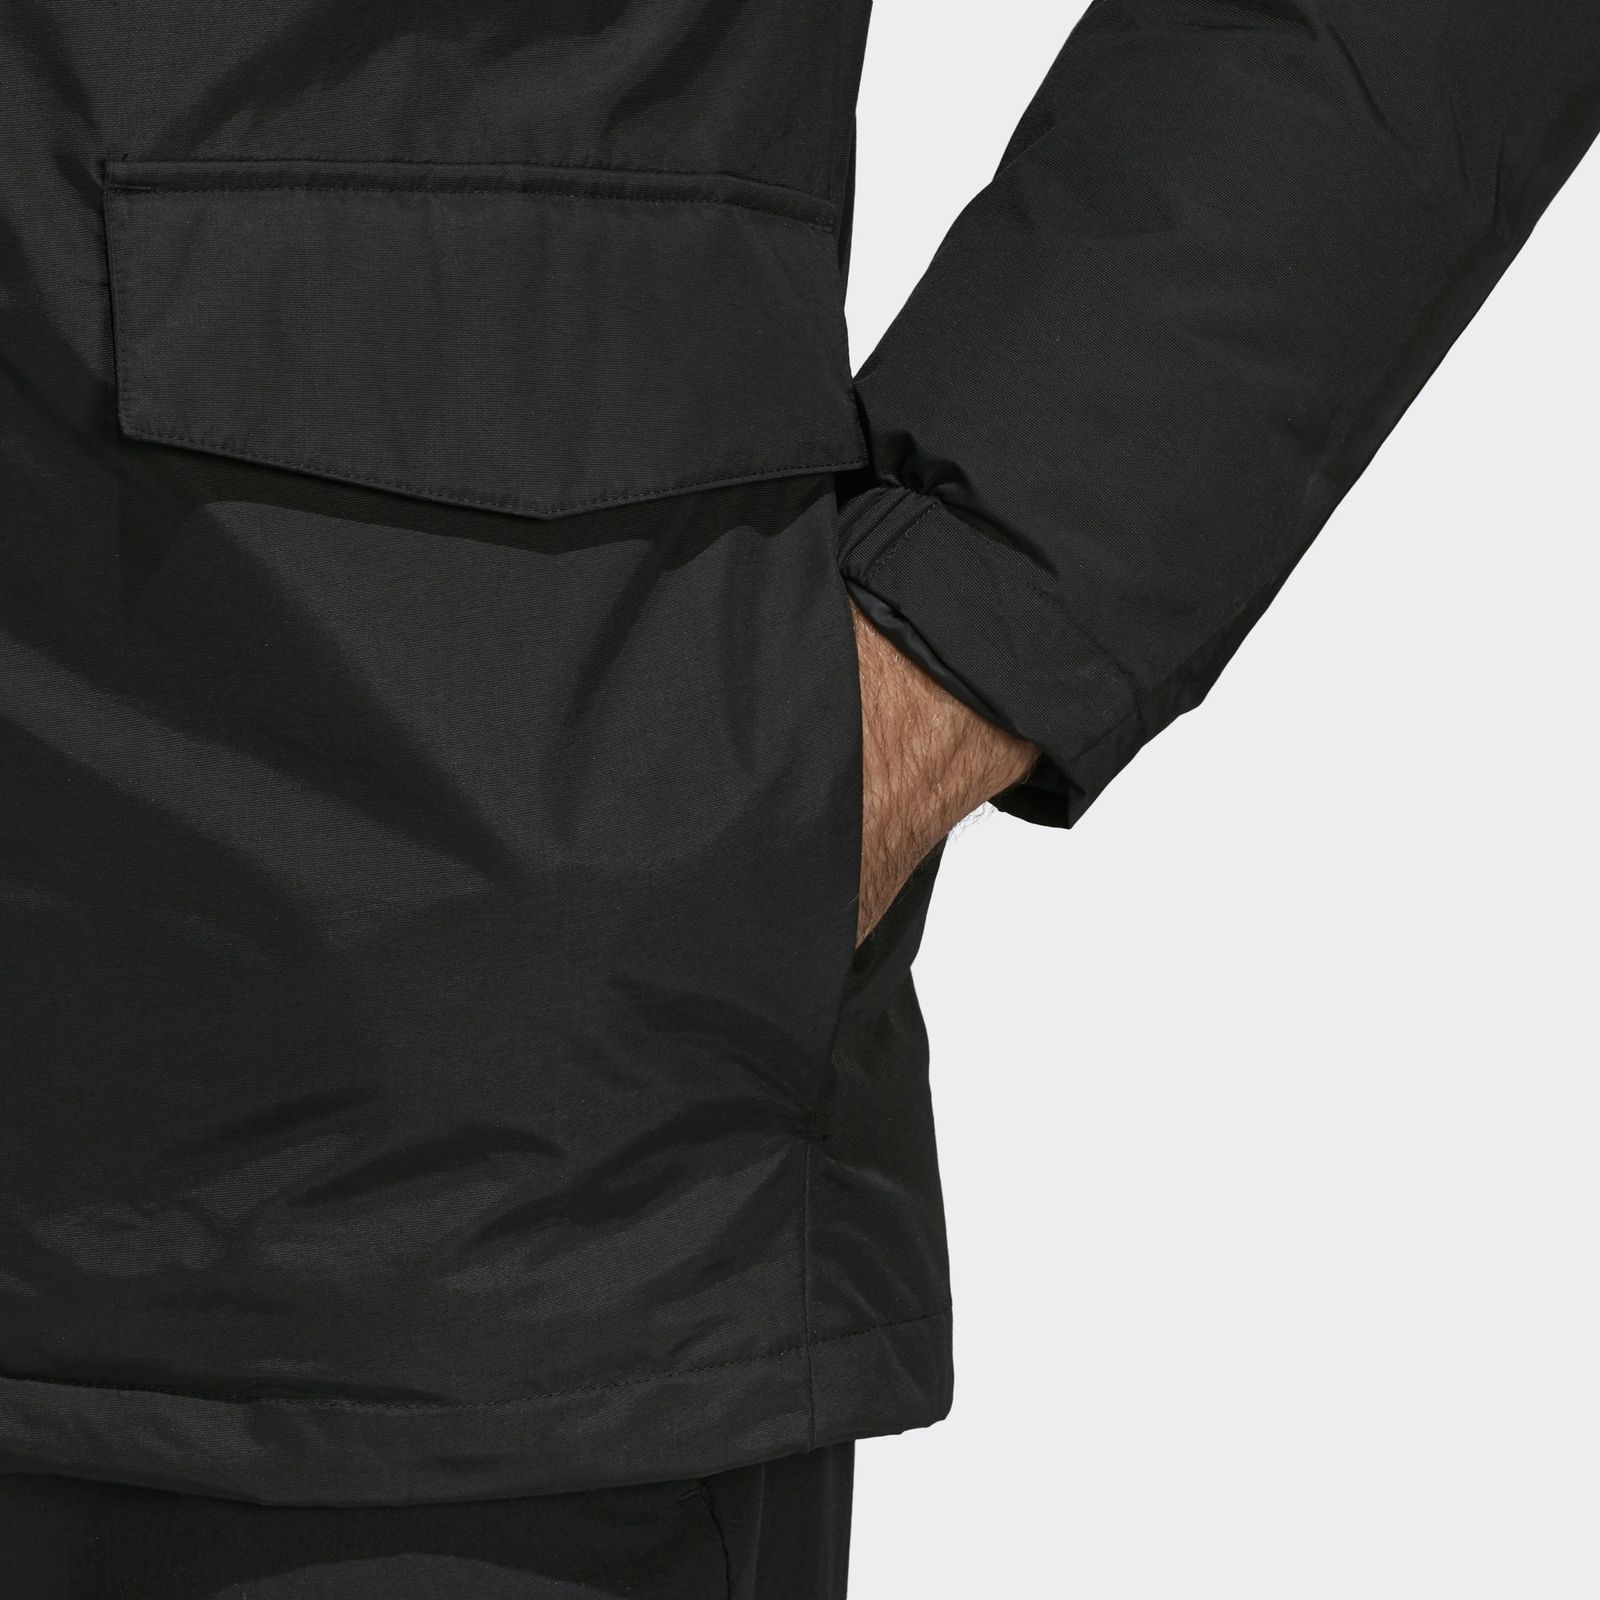   Adidas SDP Jacket Fur, : . CF0879.  S (44/46)